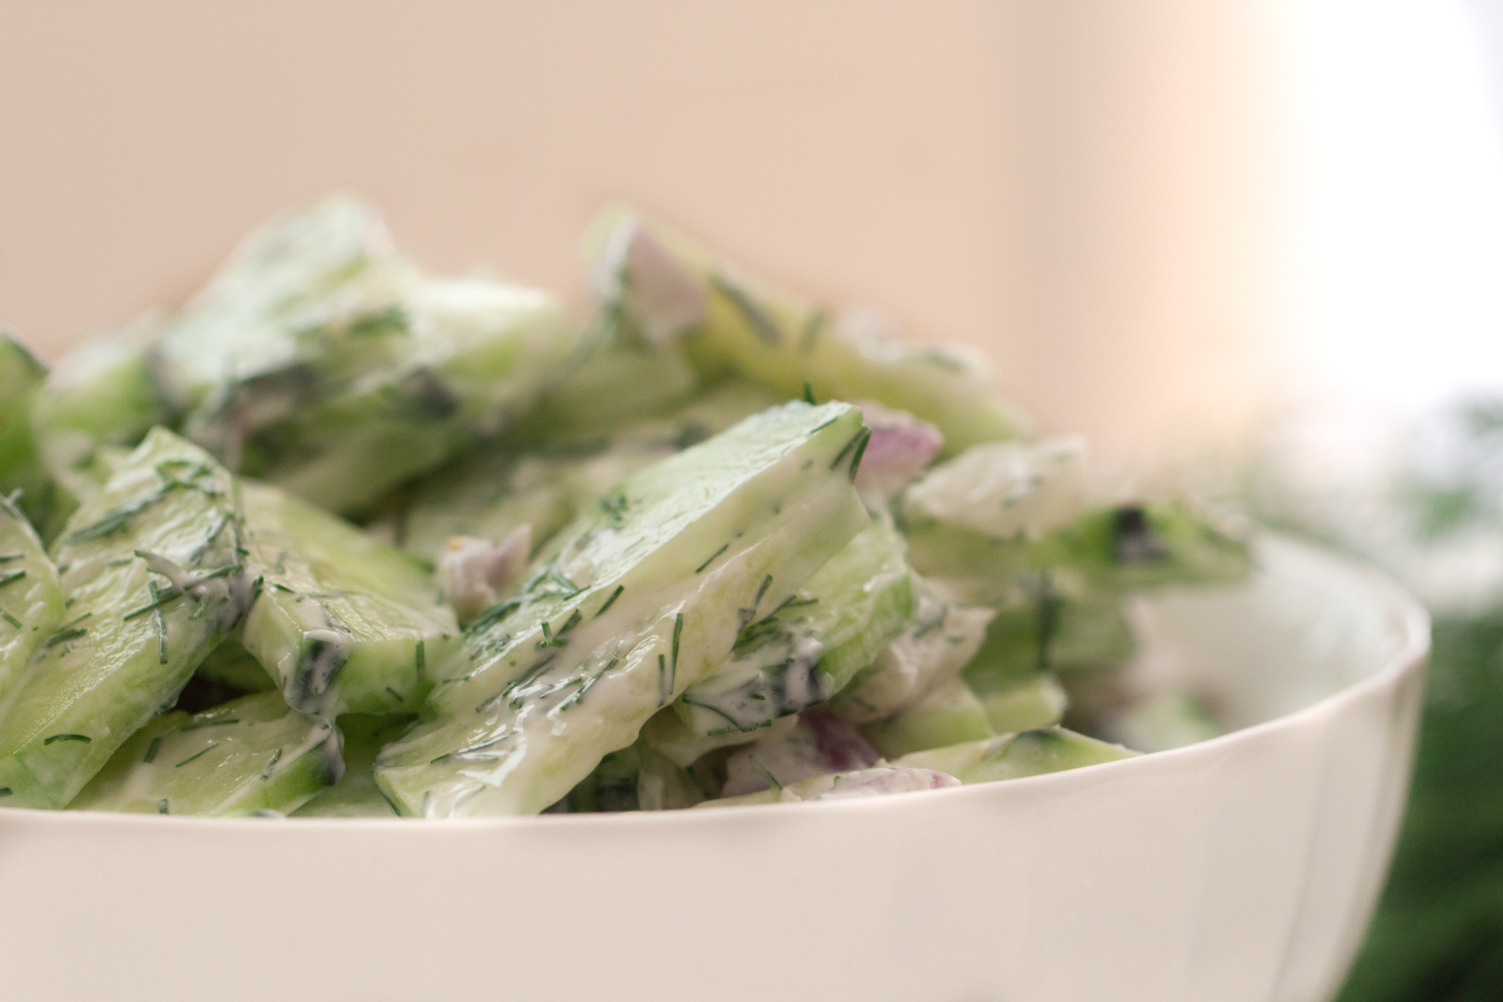 Cucumber Dill Salad Recipe